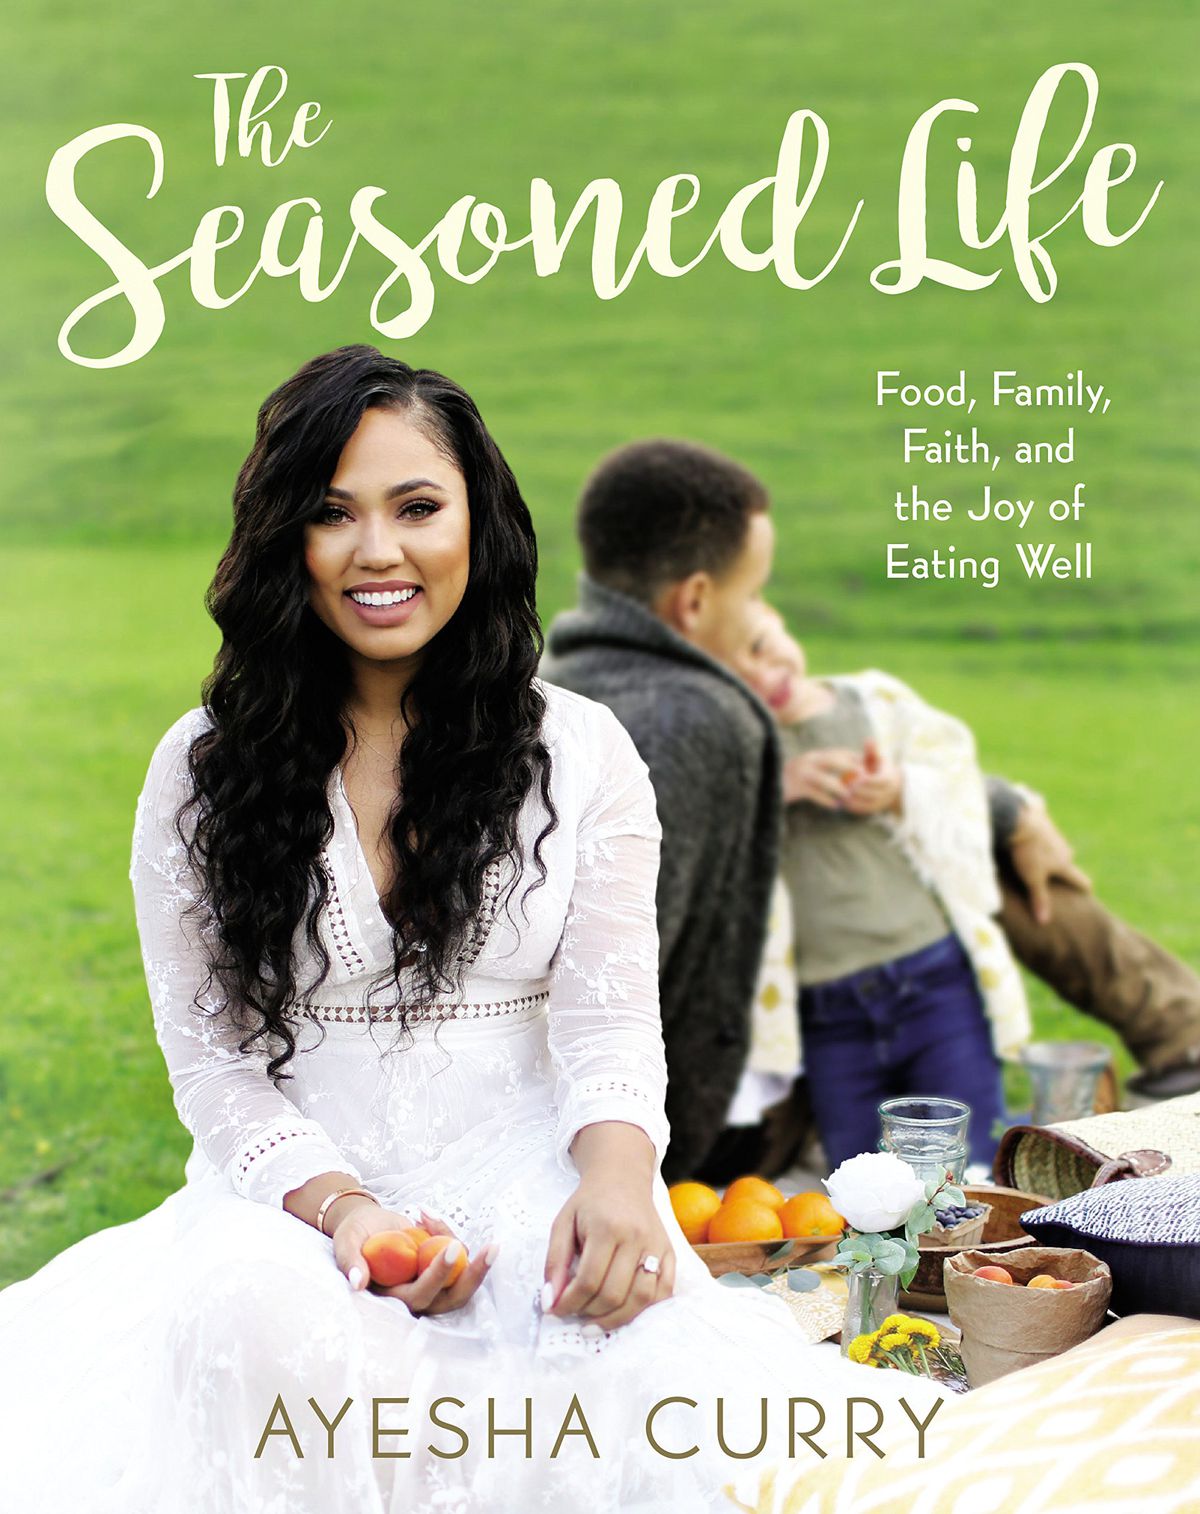 Ayesha Curry's cookbook